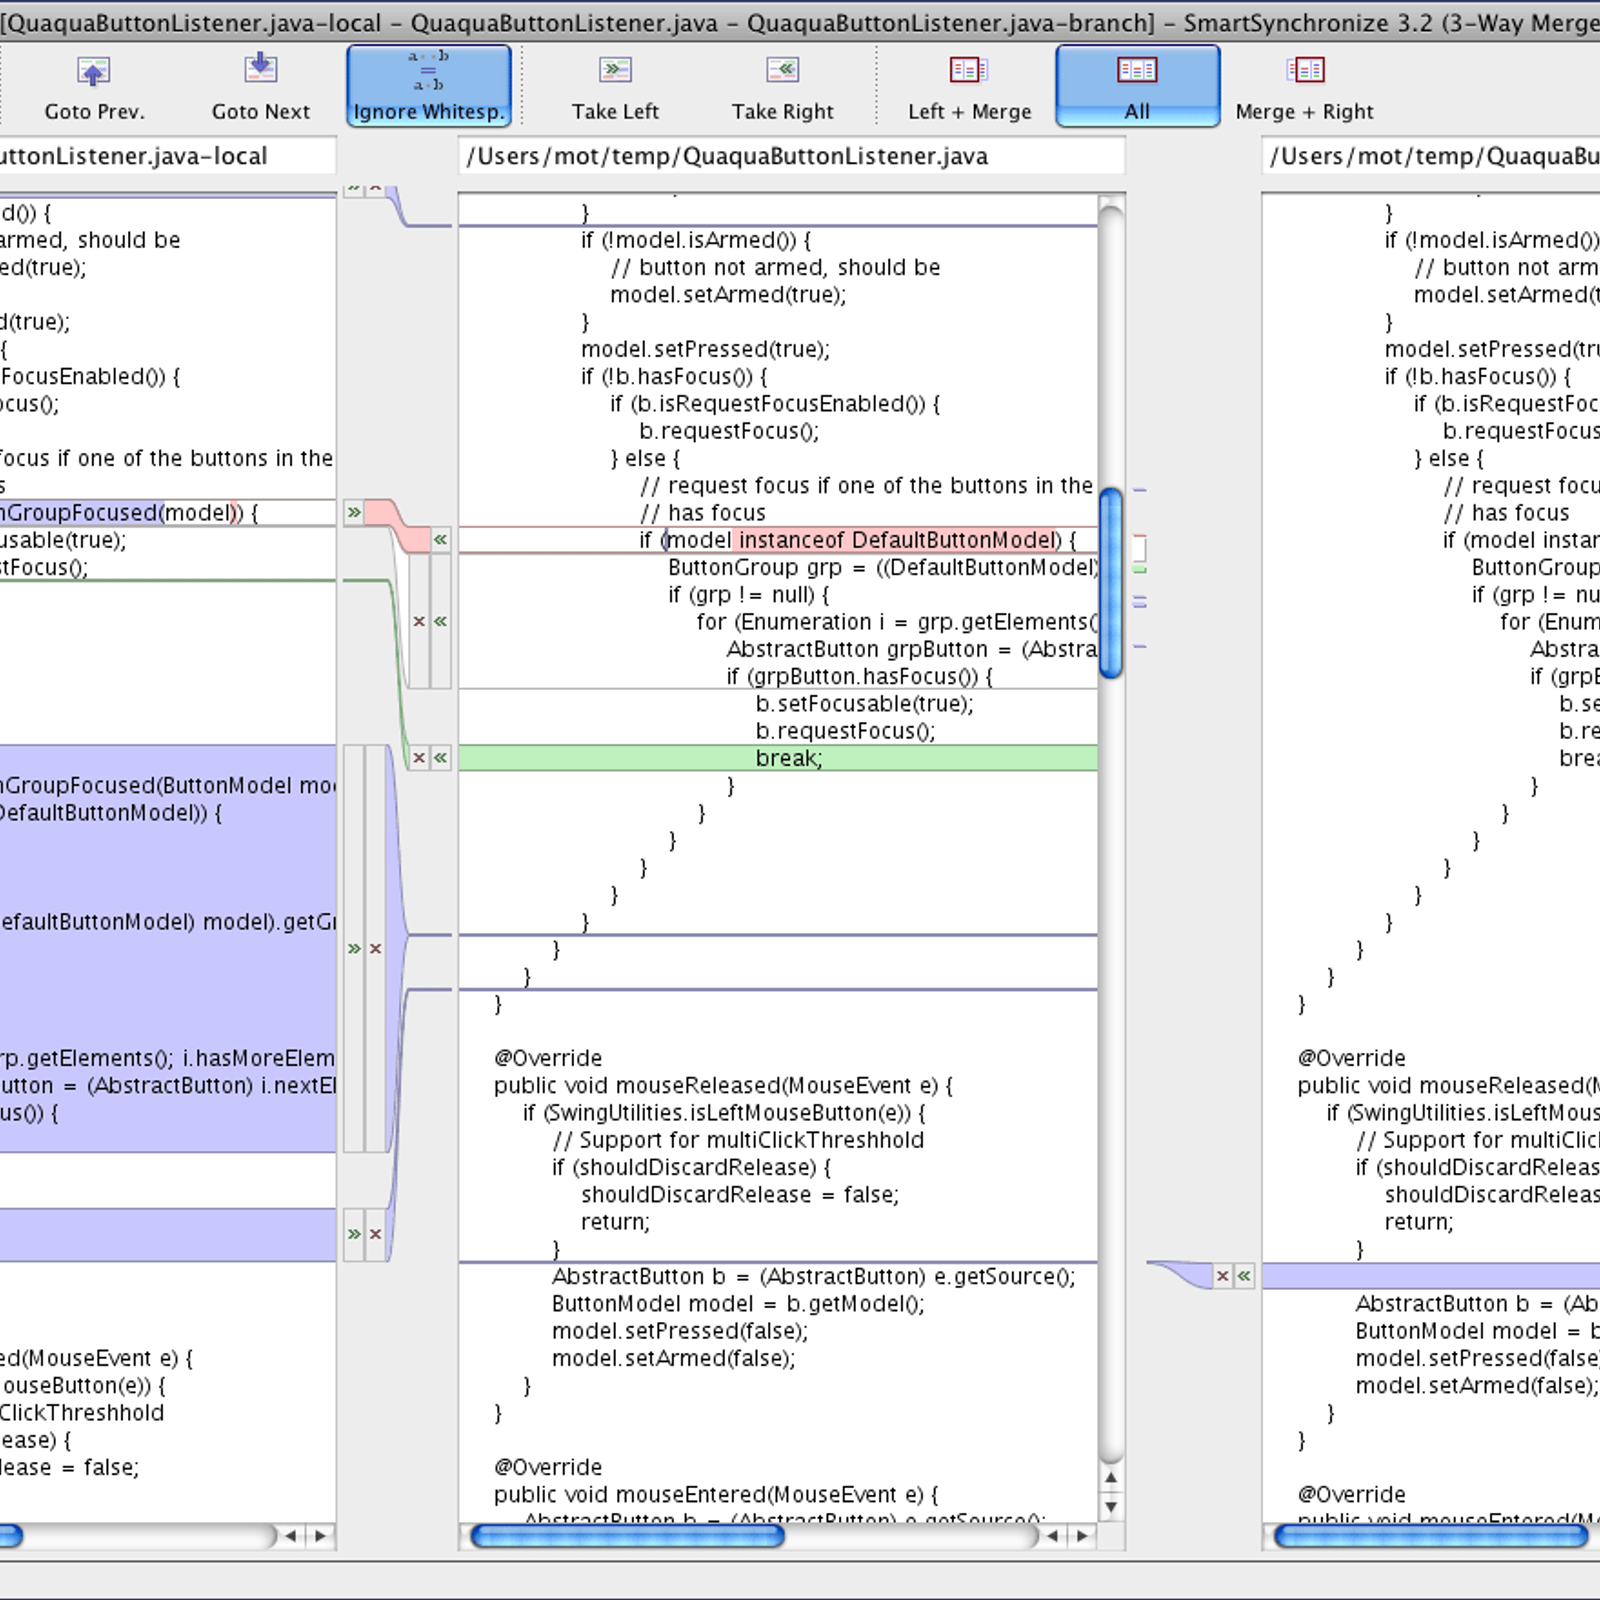 Folder merge tool